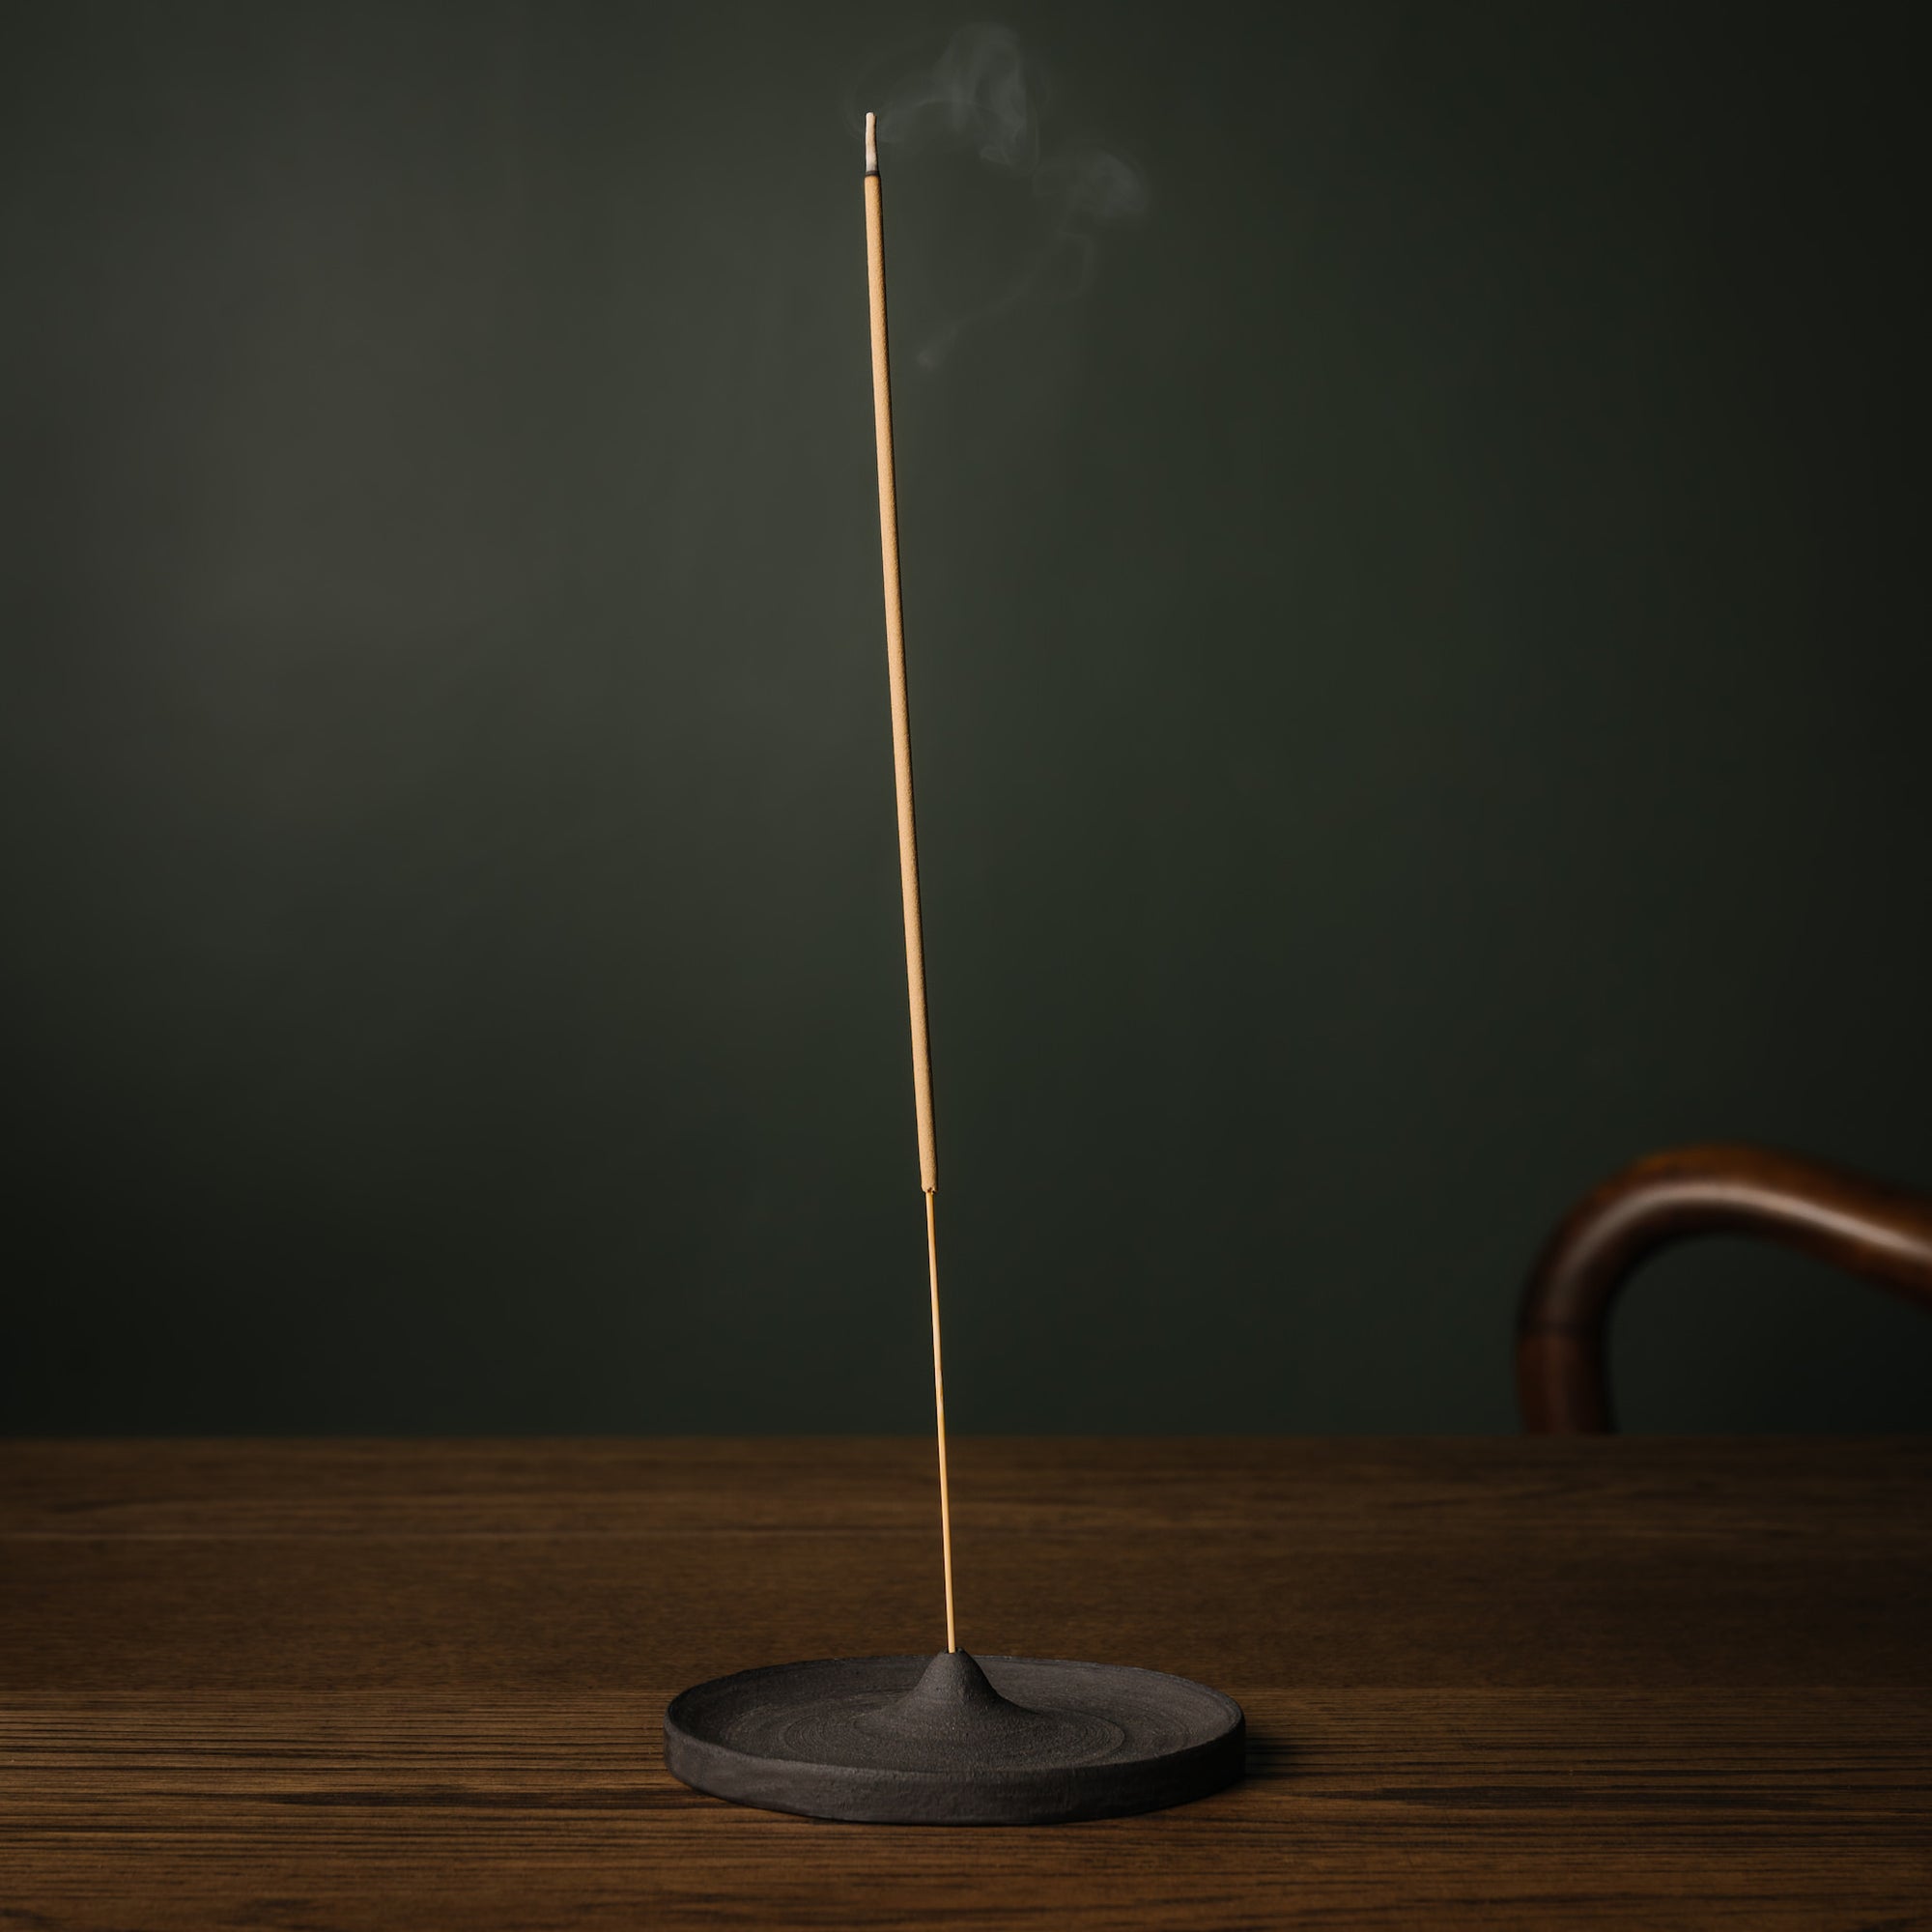 Apotheke Incense Burning in Incense Holder